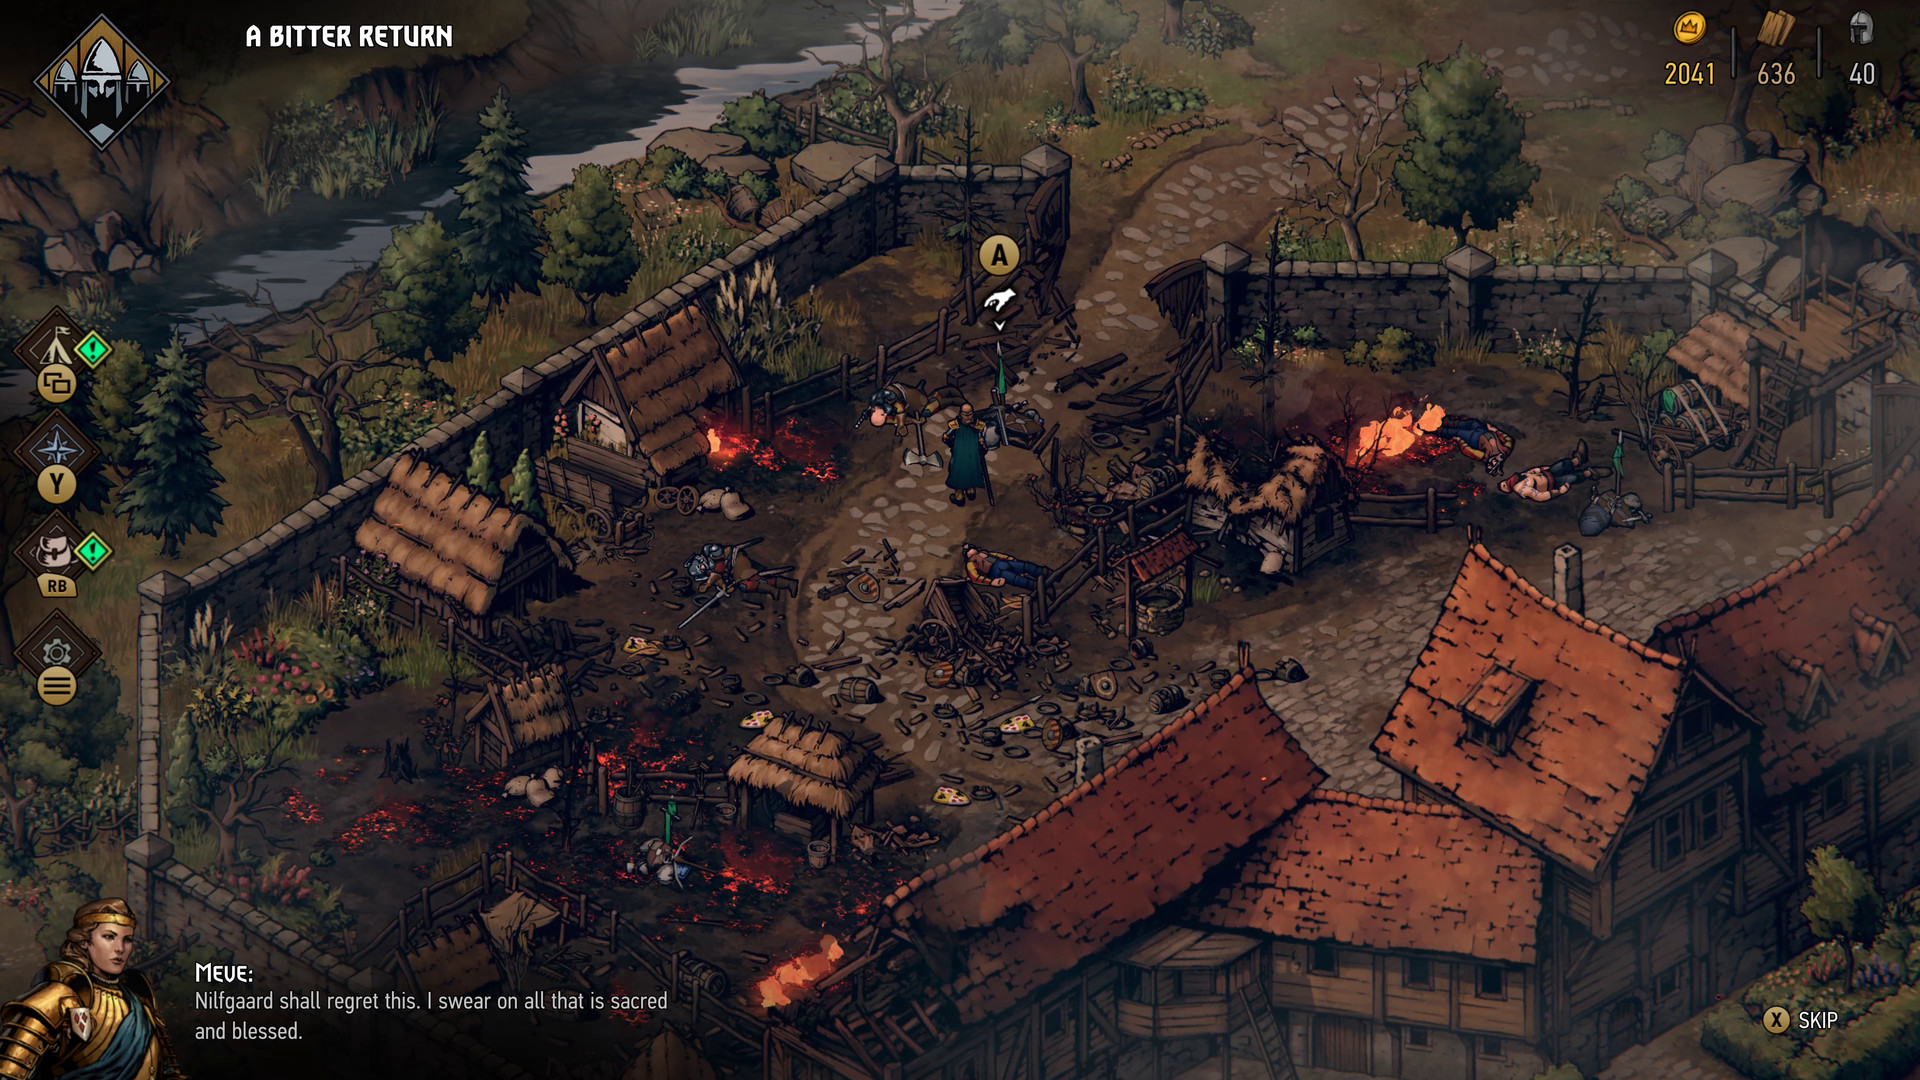 Como instalar The Witcher Tales: Thronebreaker de graça no PC com BlueStacks